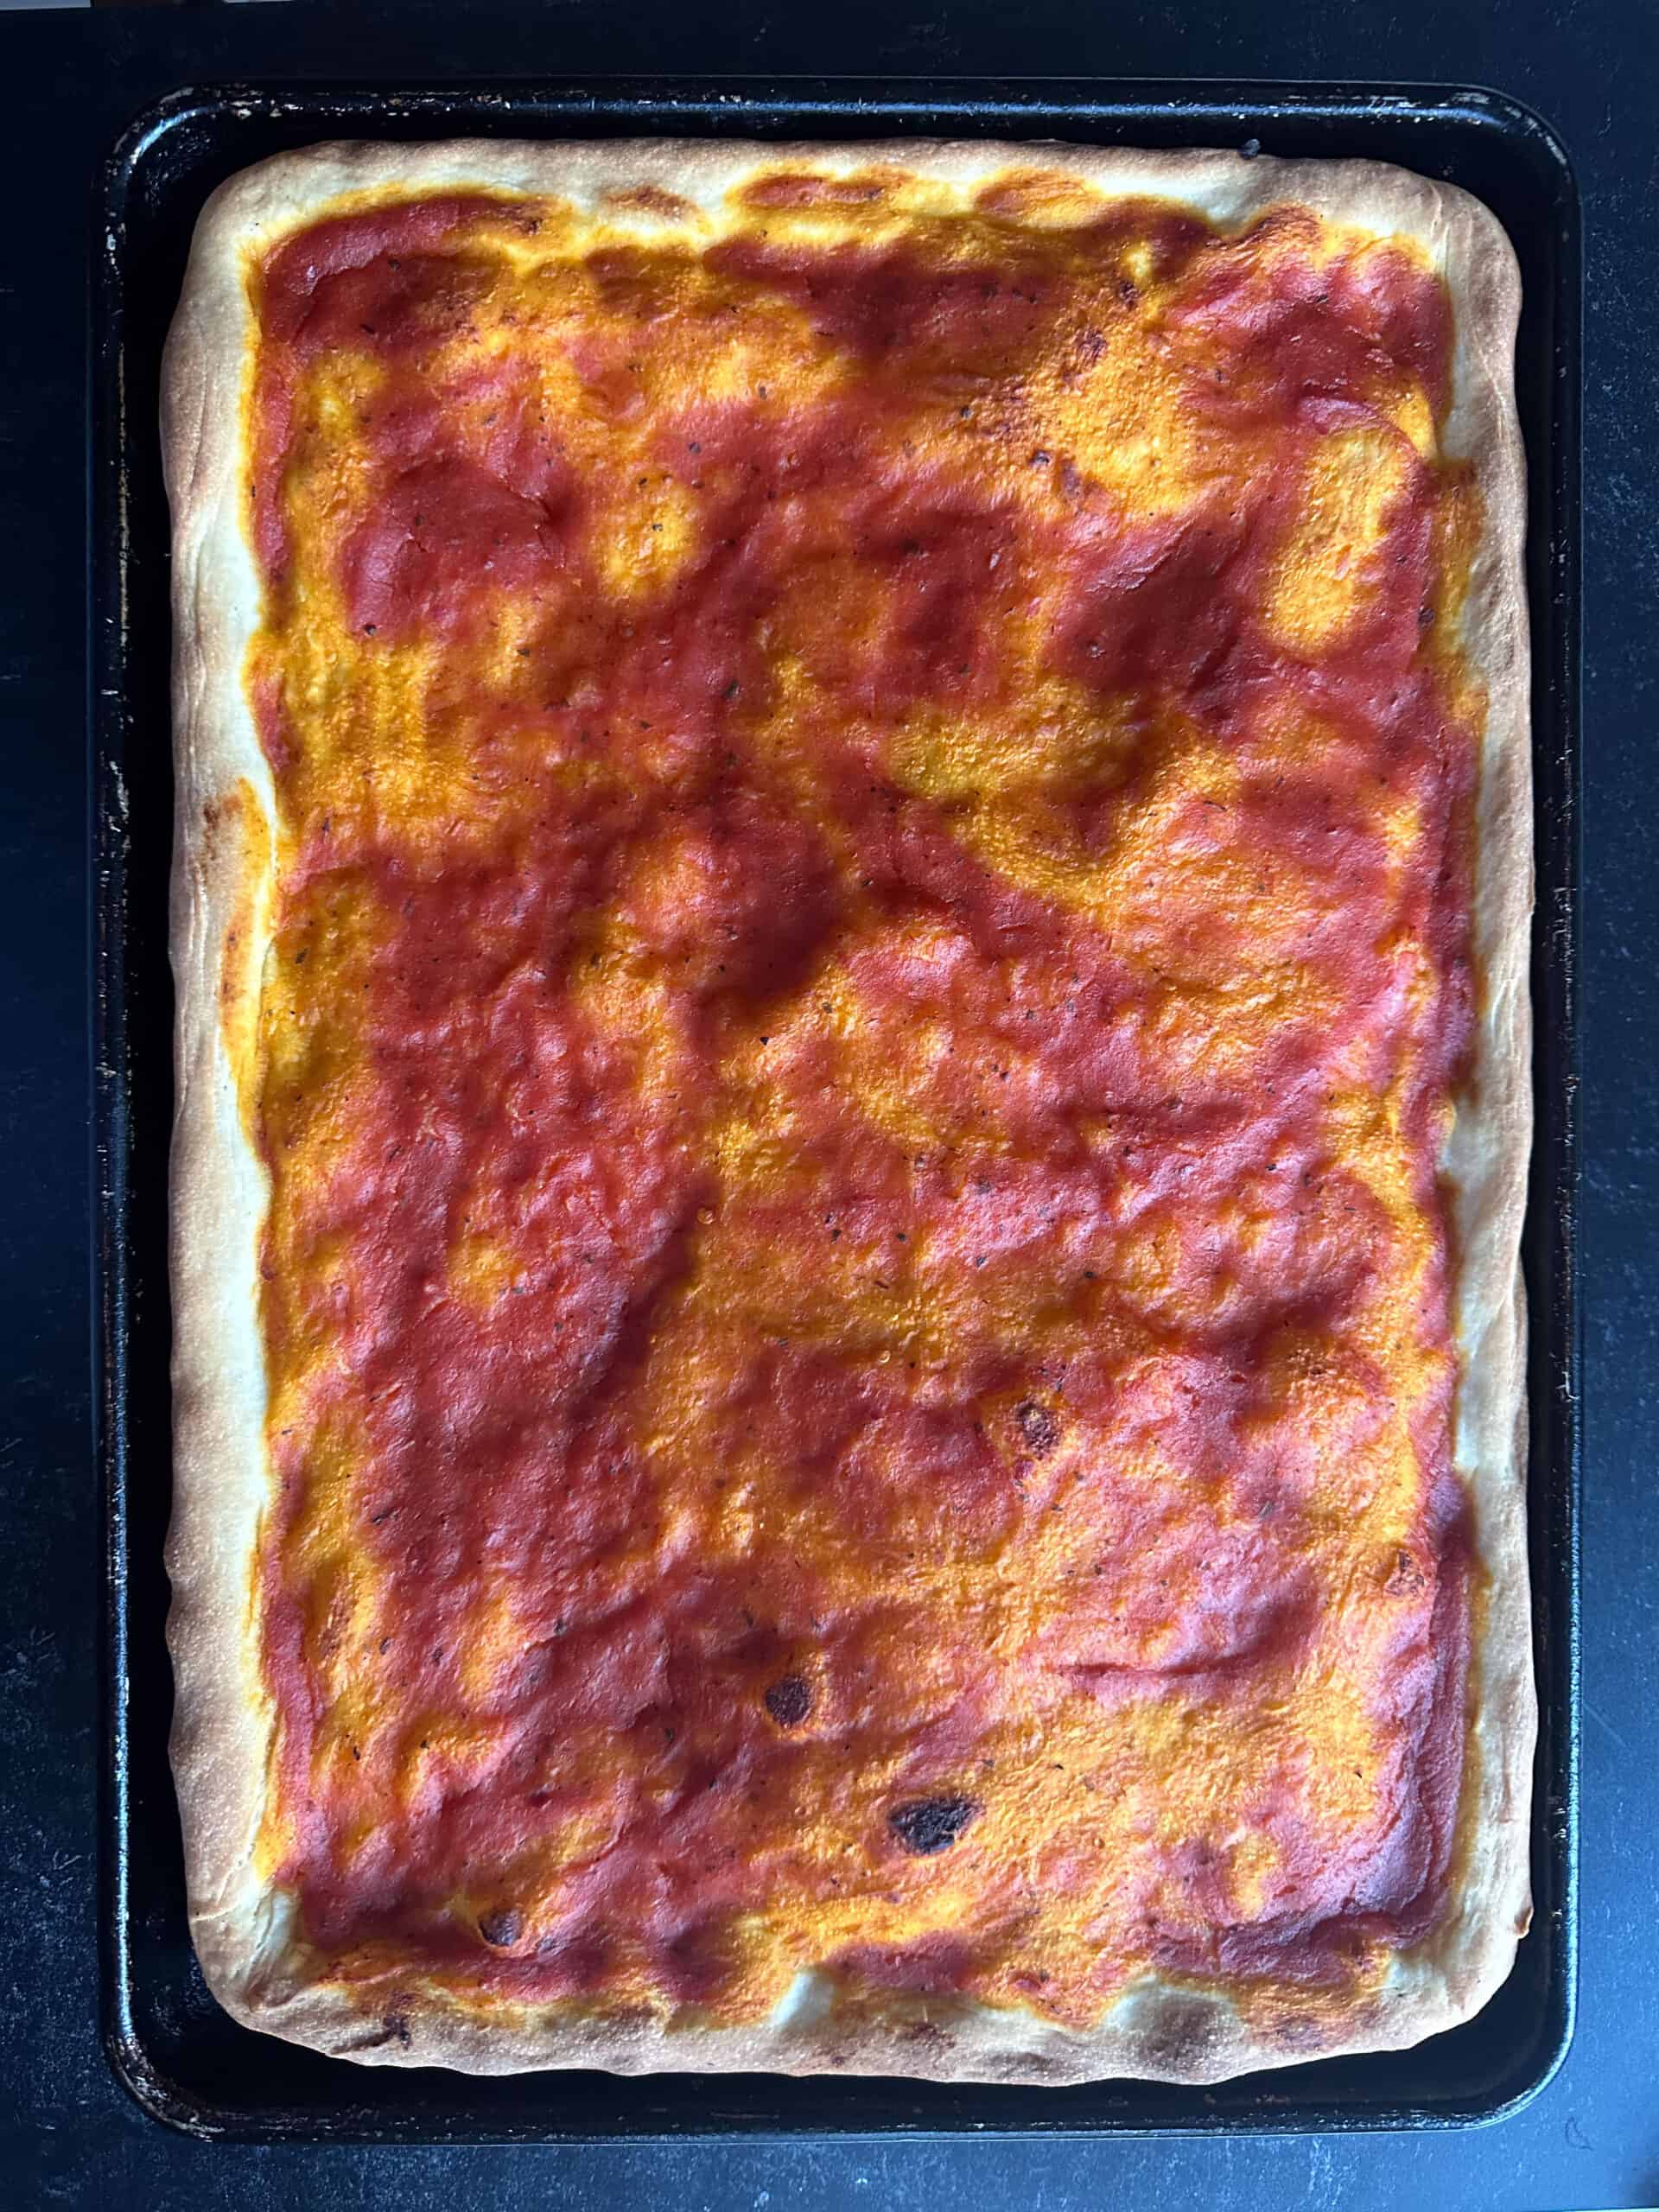 par baked tomato pie with minimal sauce